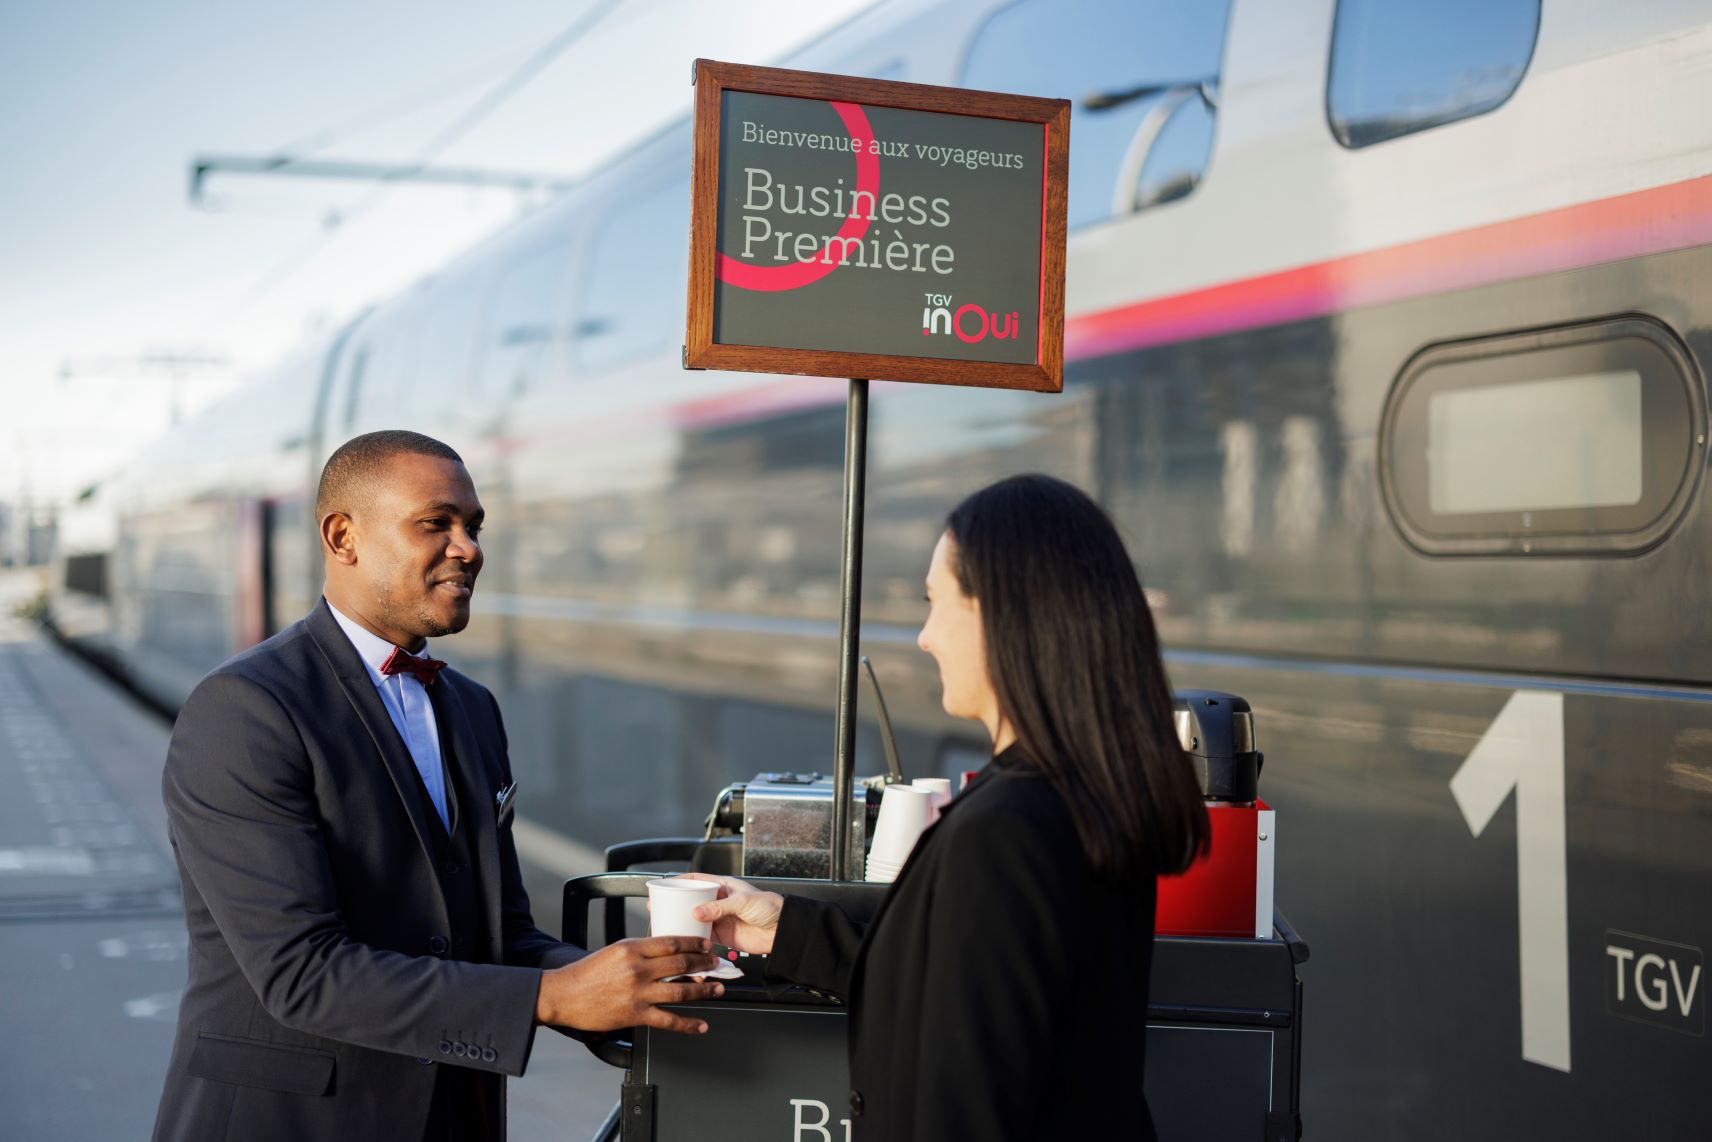 SNCF TGV Inoui Business Première Service beim Einstieg